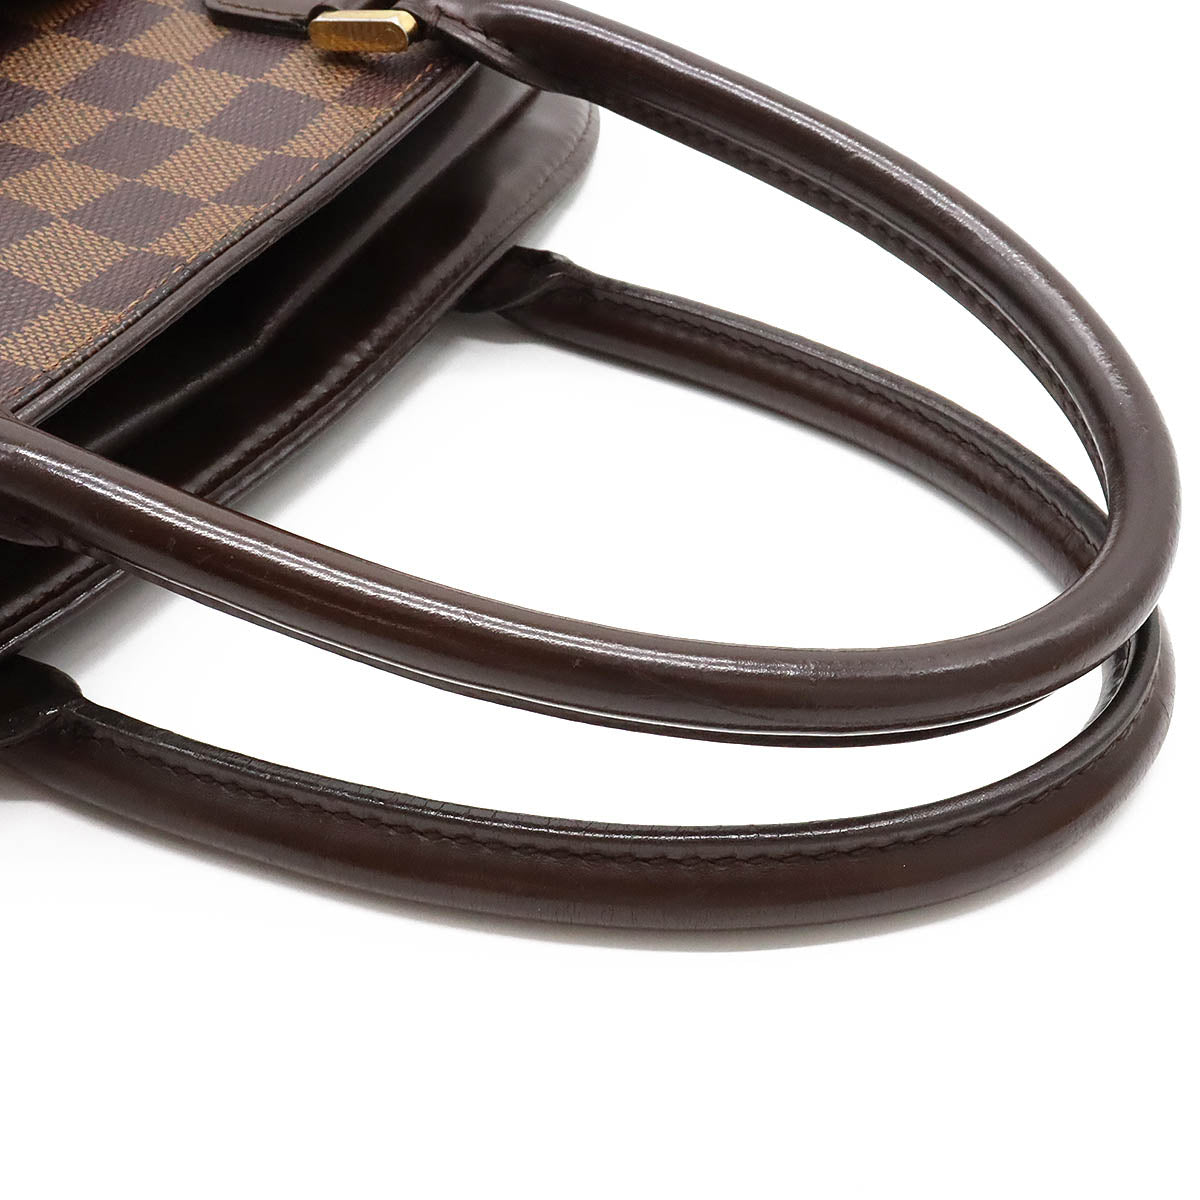 Louis Vuitton Brera Brown Canvas Handbag (Pre-Owned)